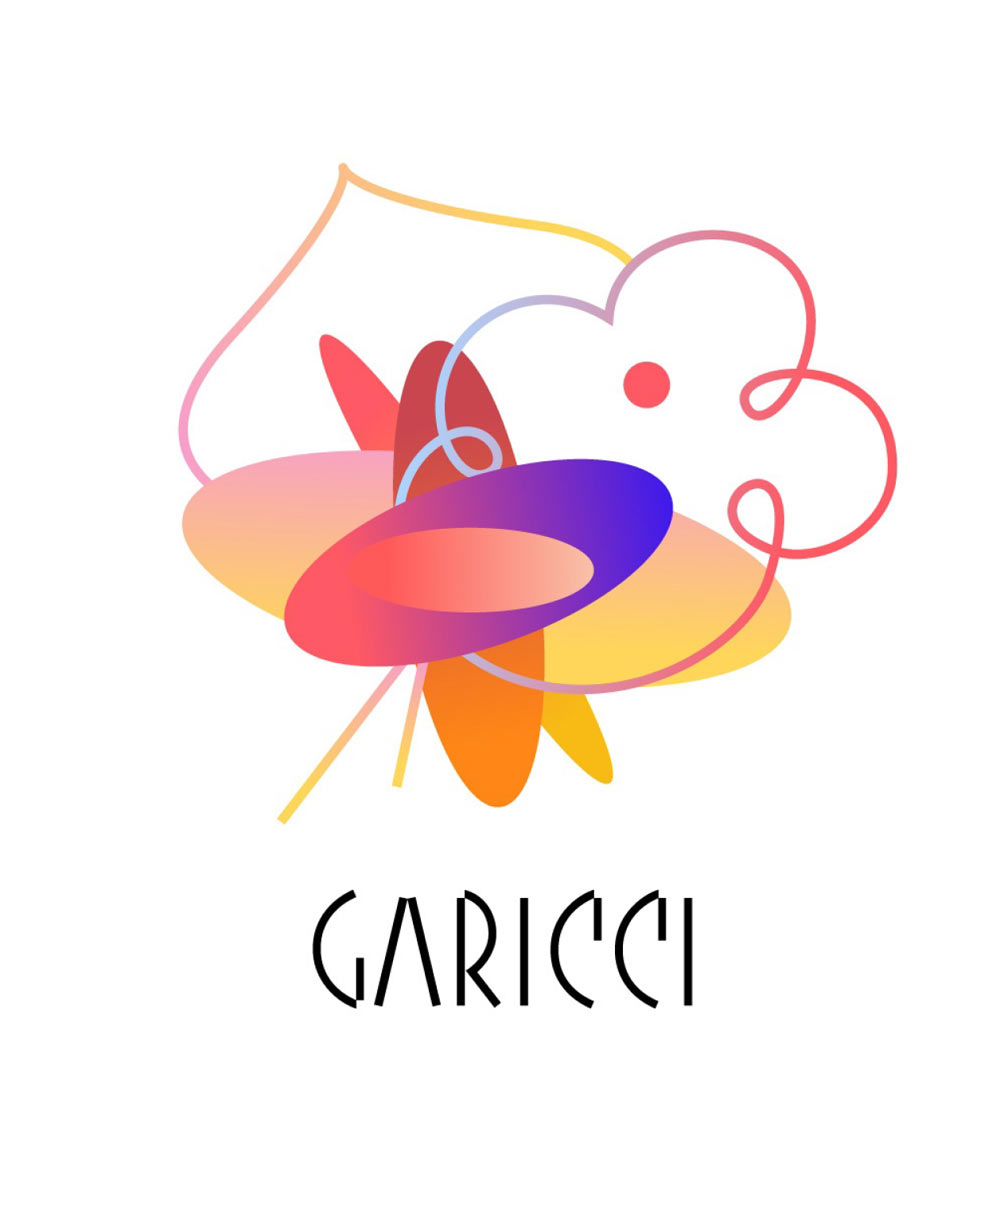 garicci process 06